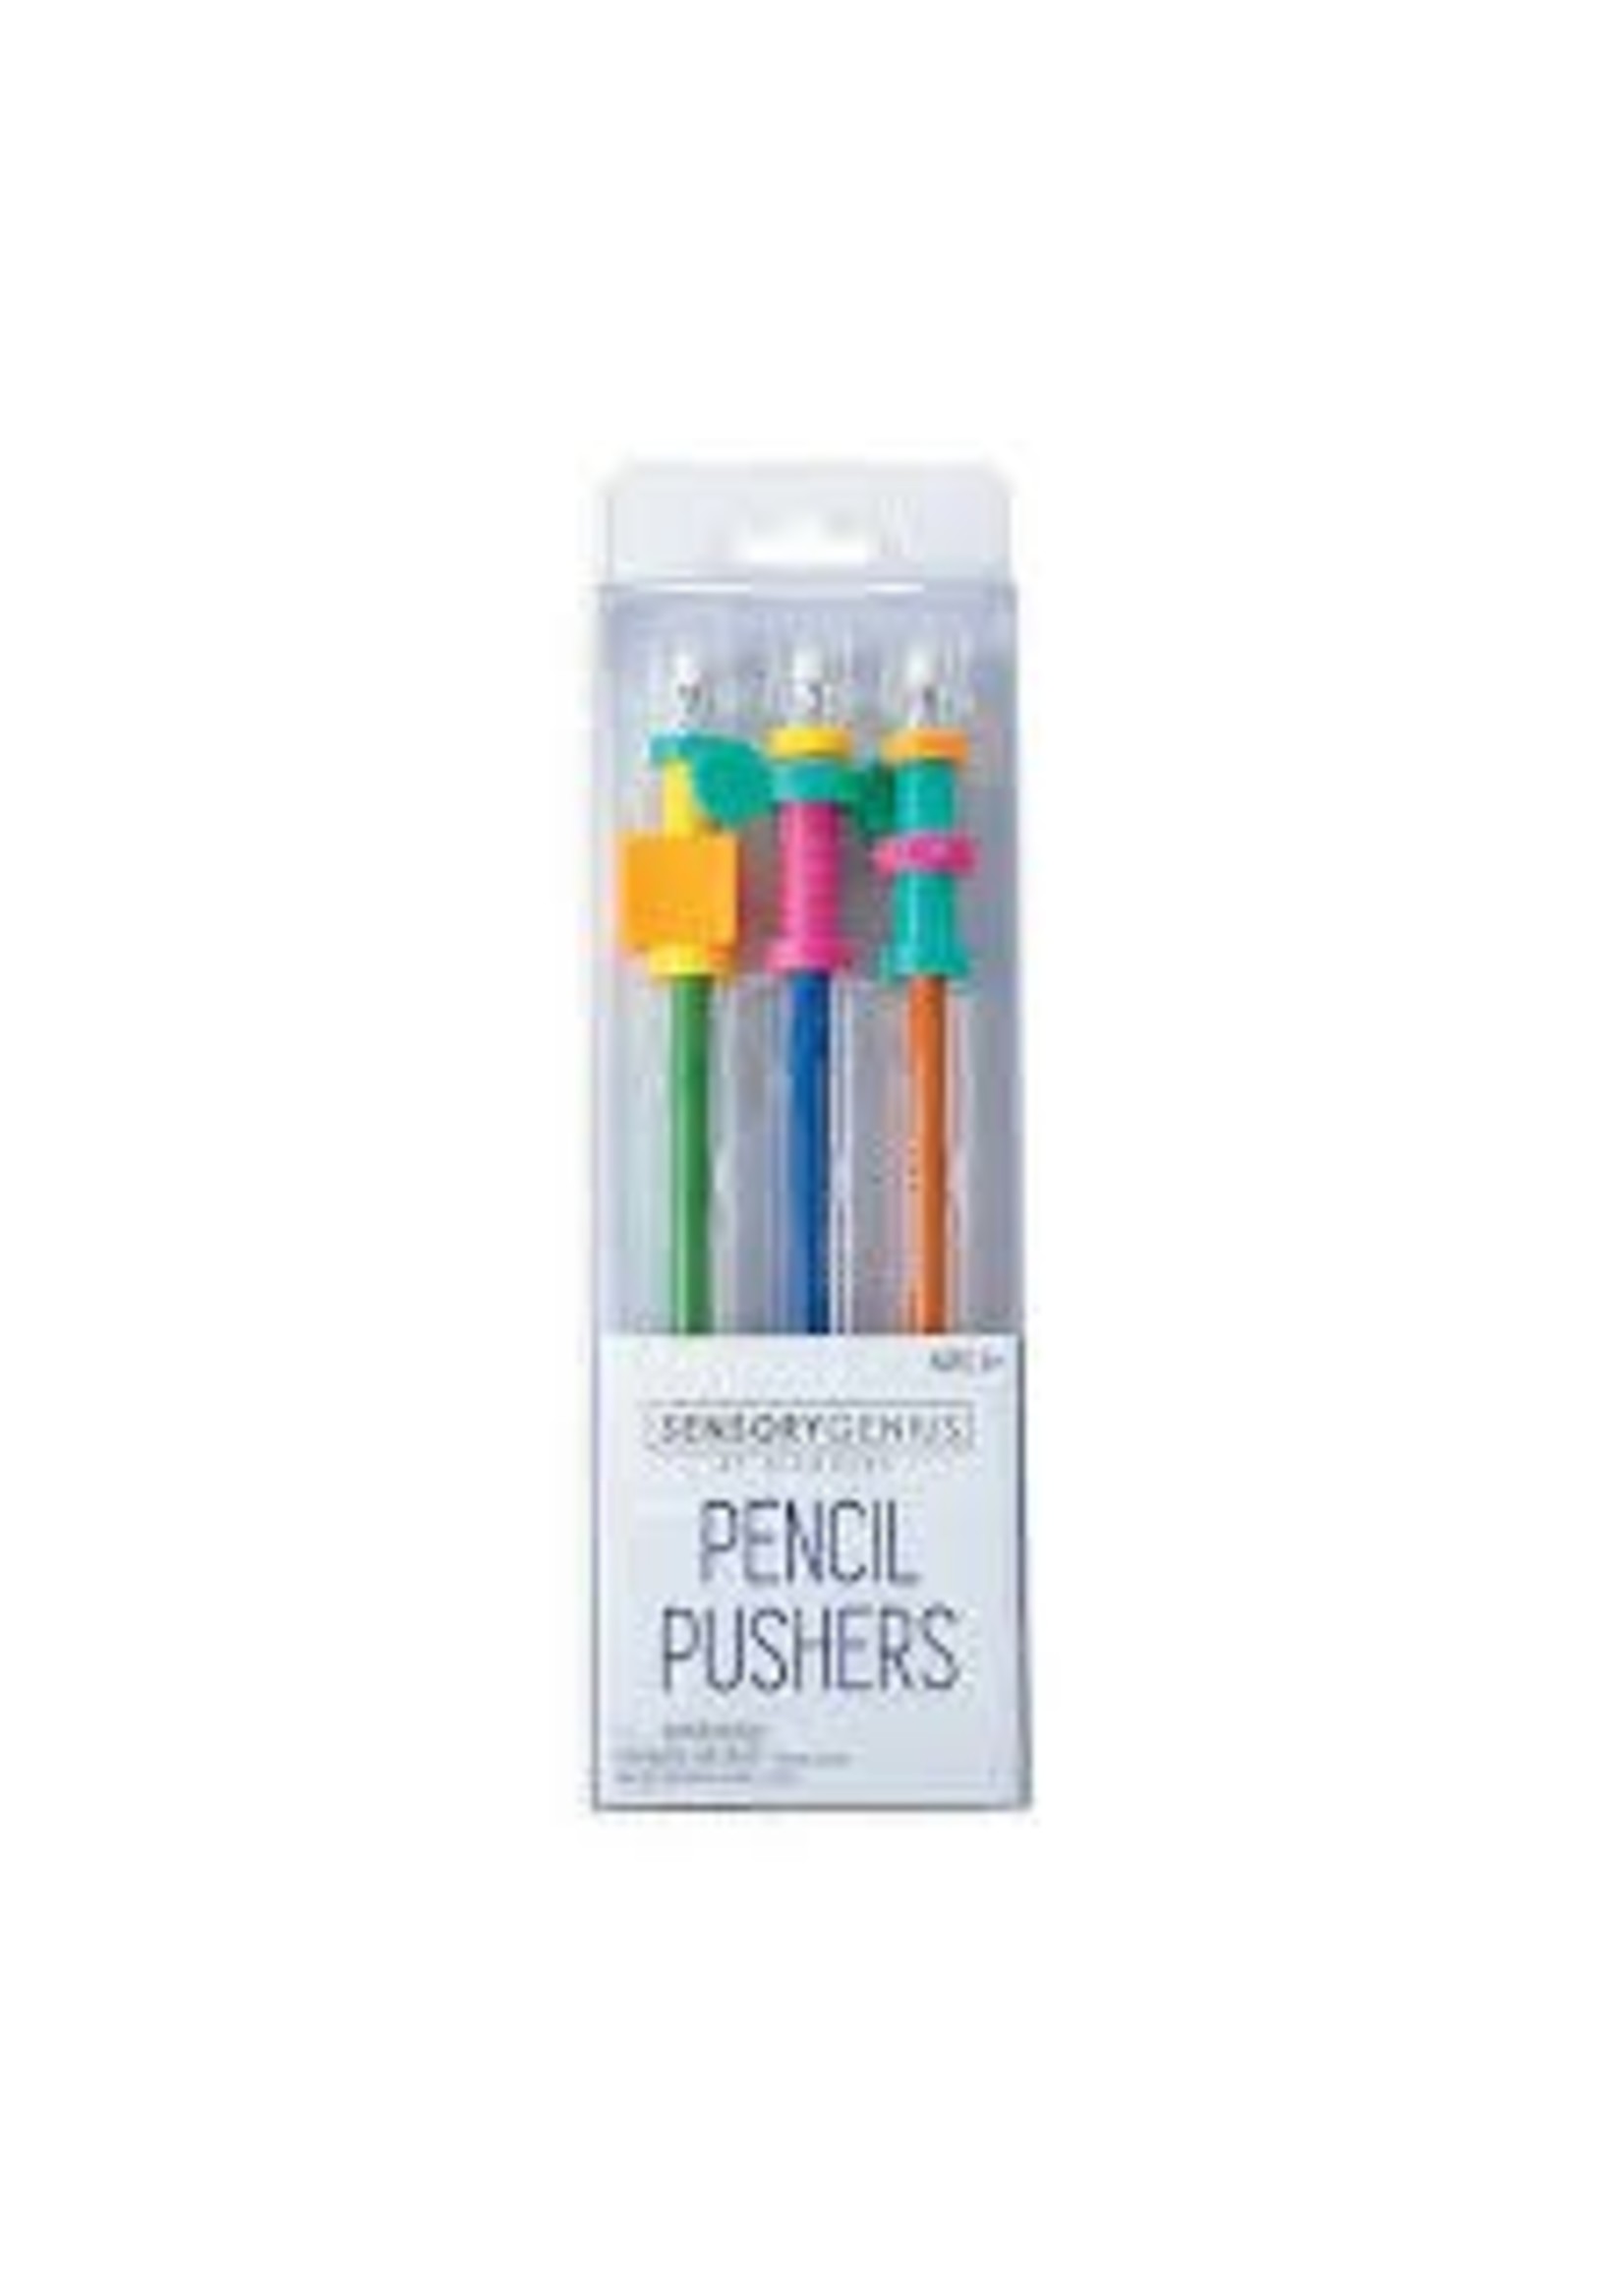 MindWare Pencil Pushers (Sensory Genius)